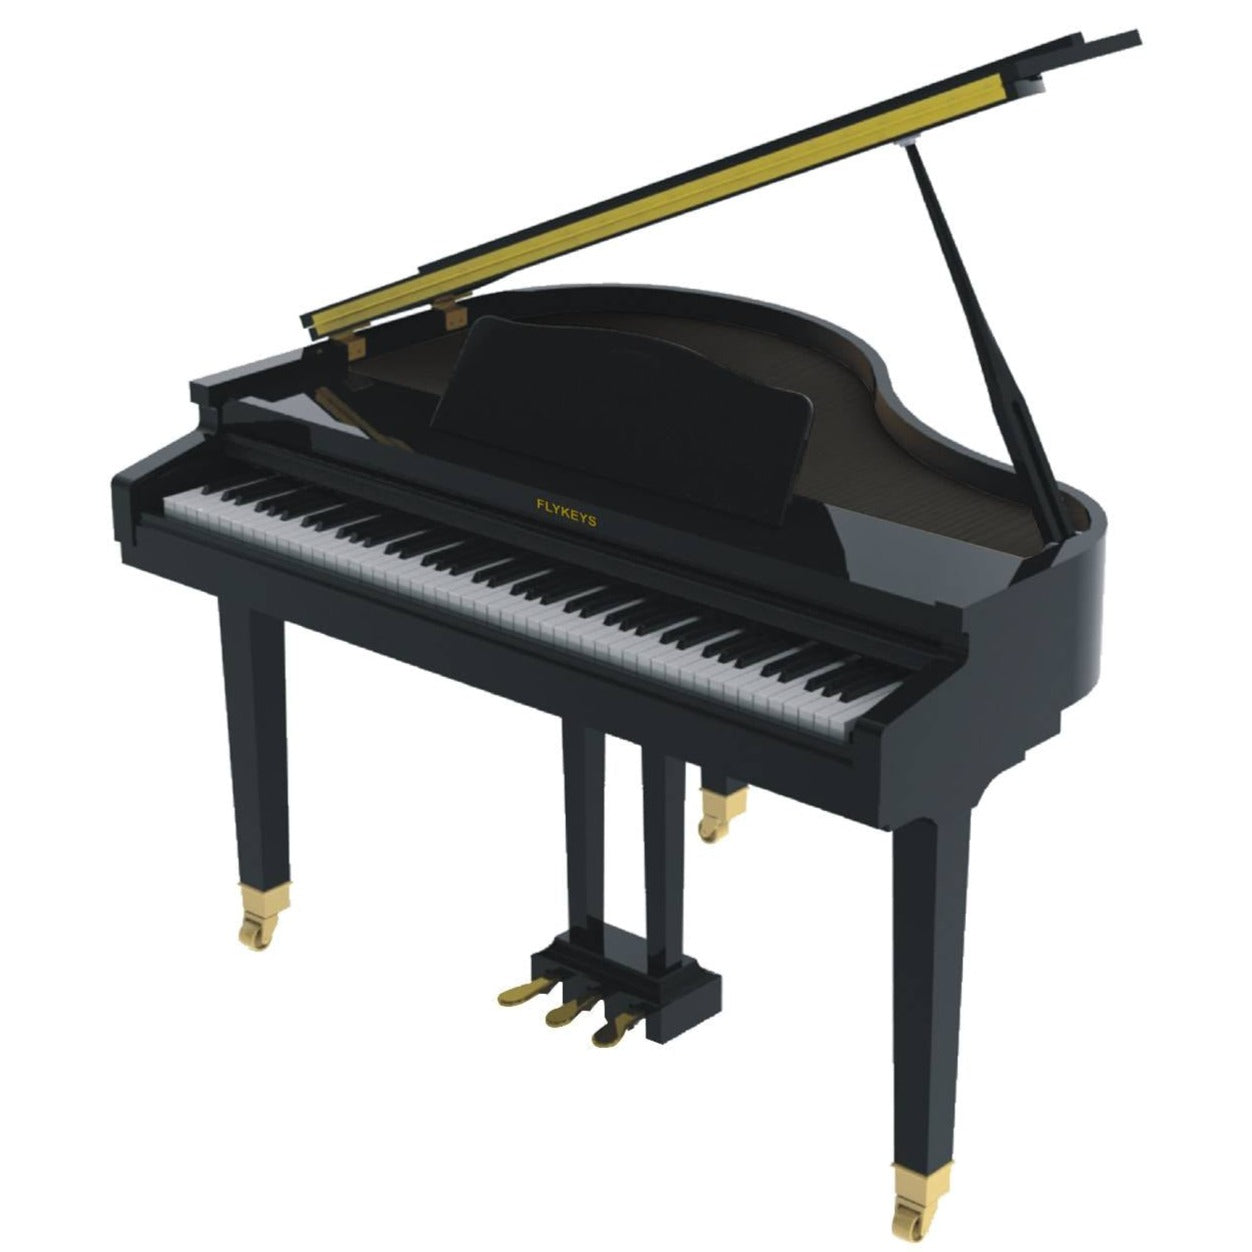 Flykeys FGP110 88-Keys Grand Piano - Black